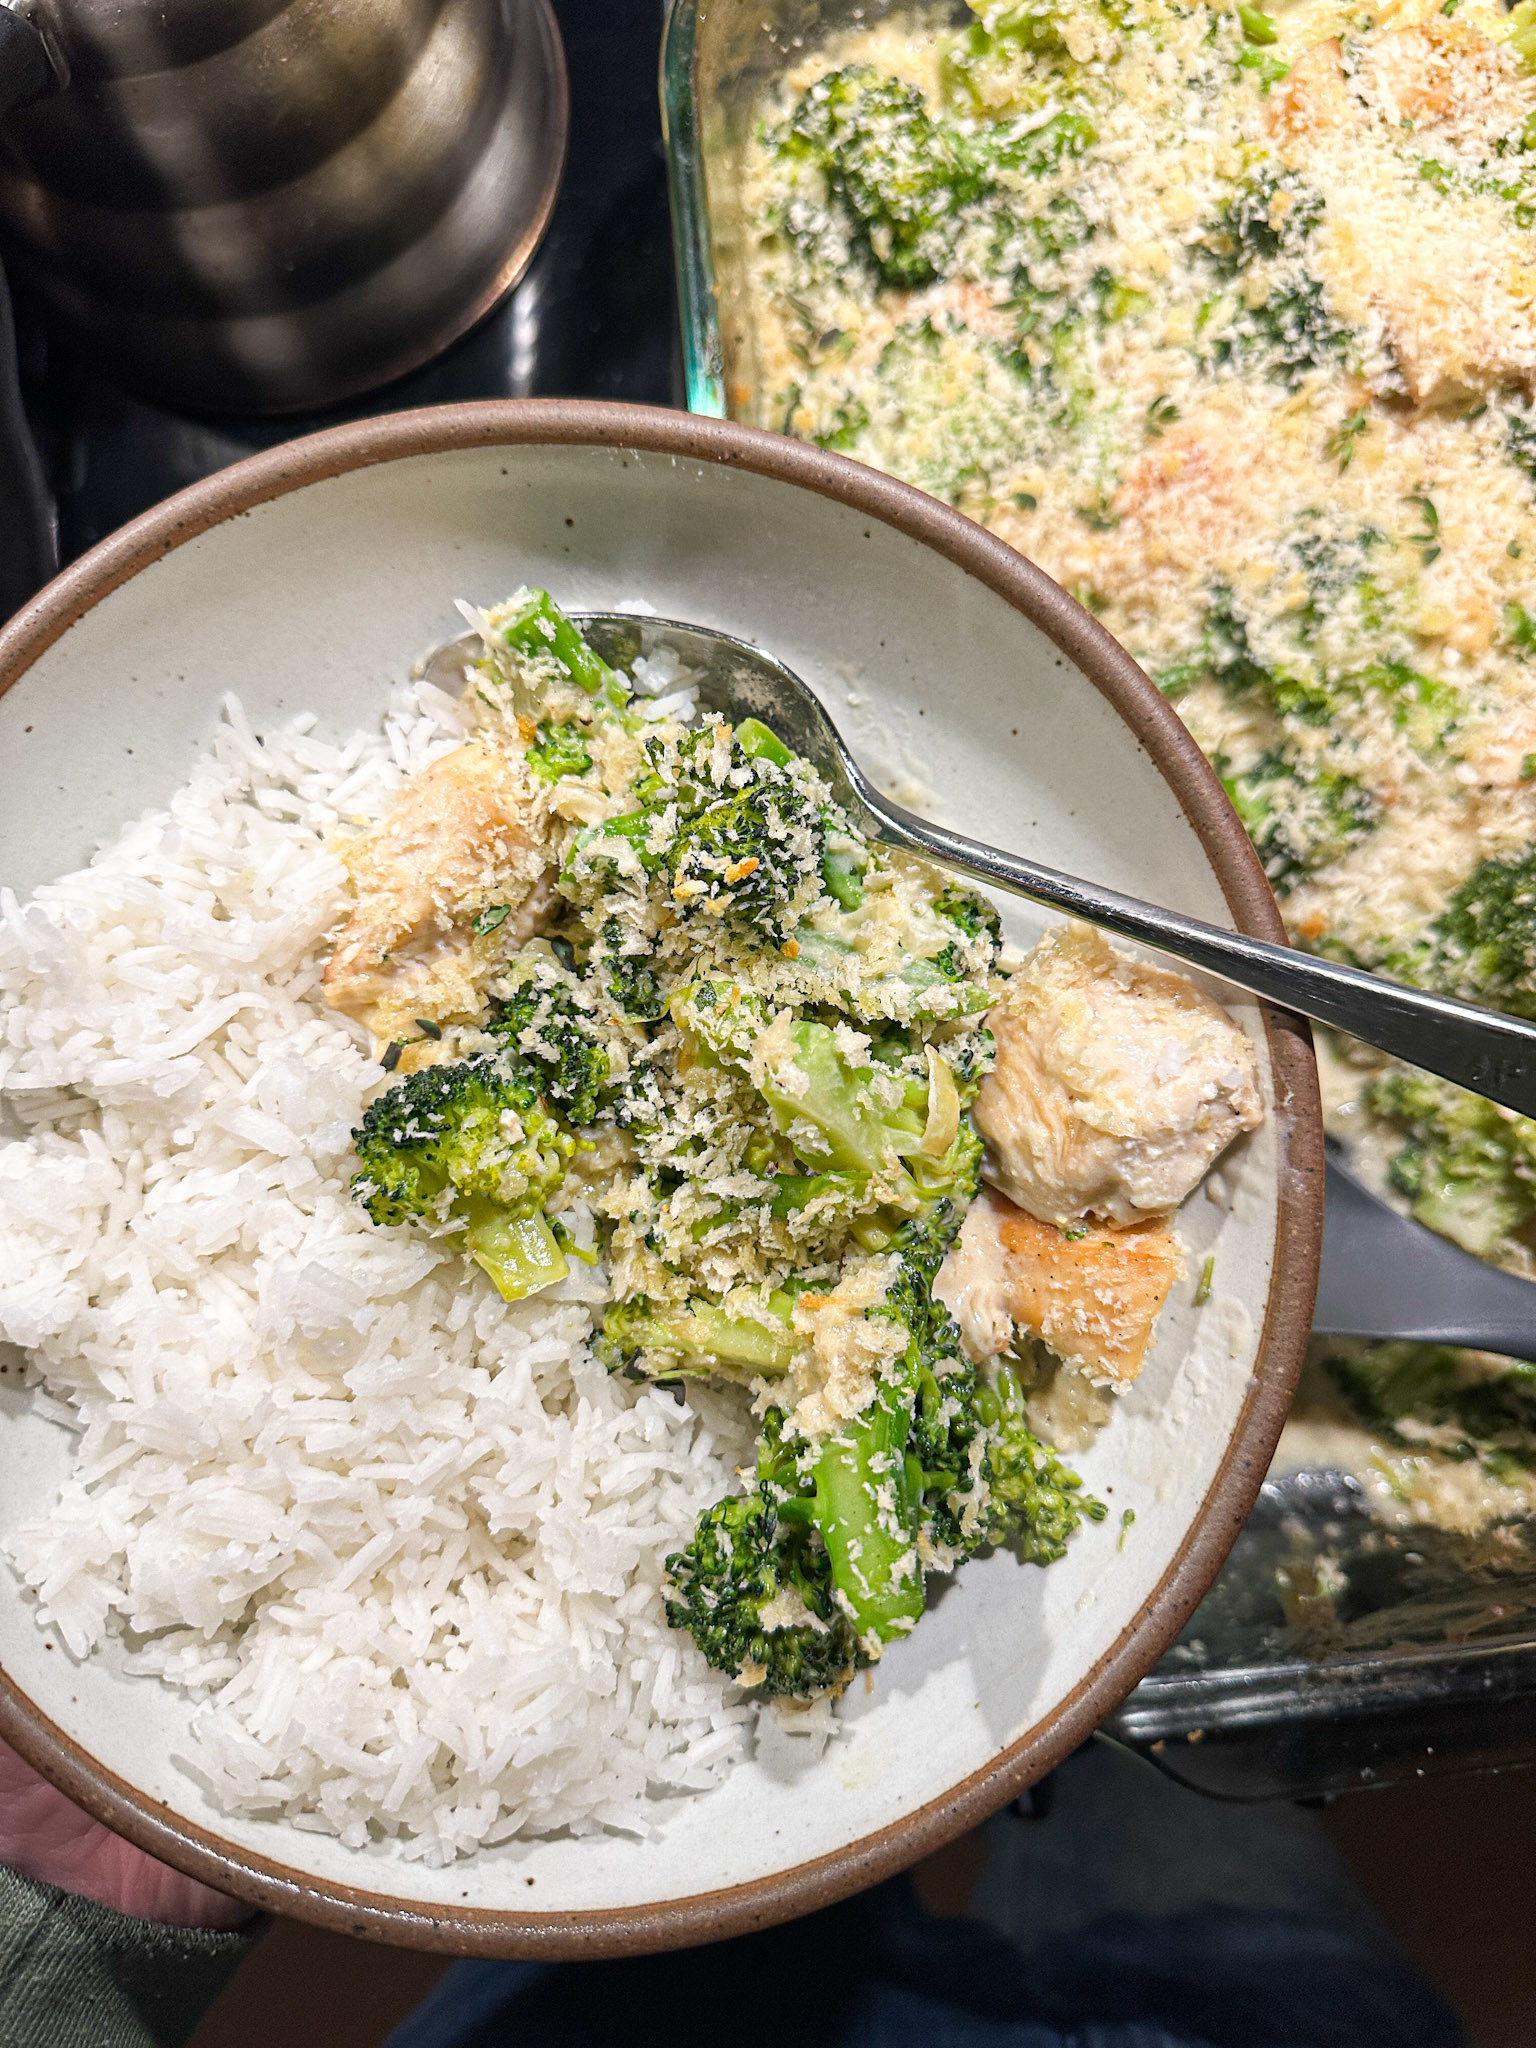 Chicken and broccoli casserole served alongside rice